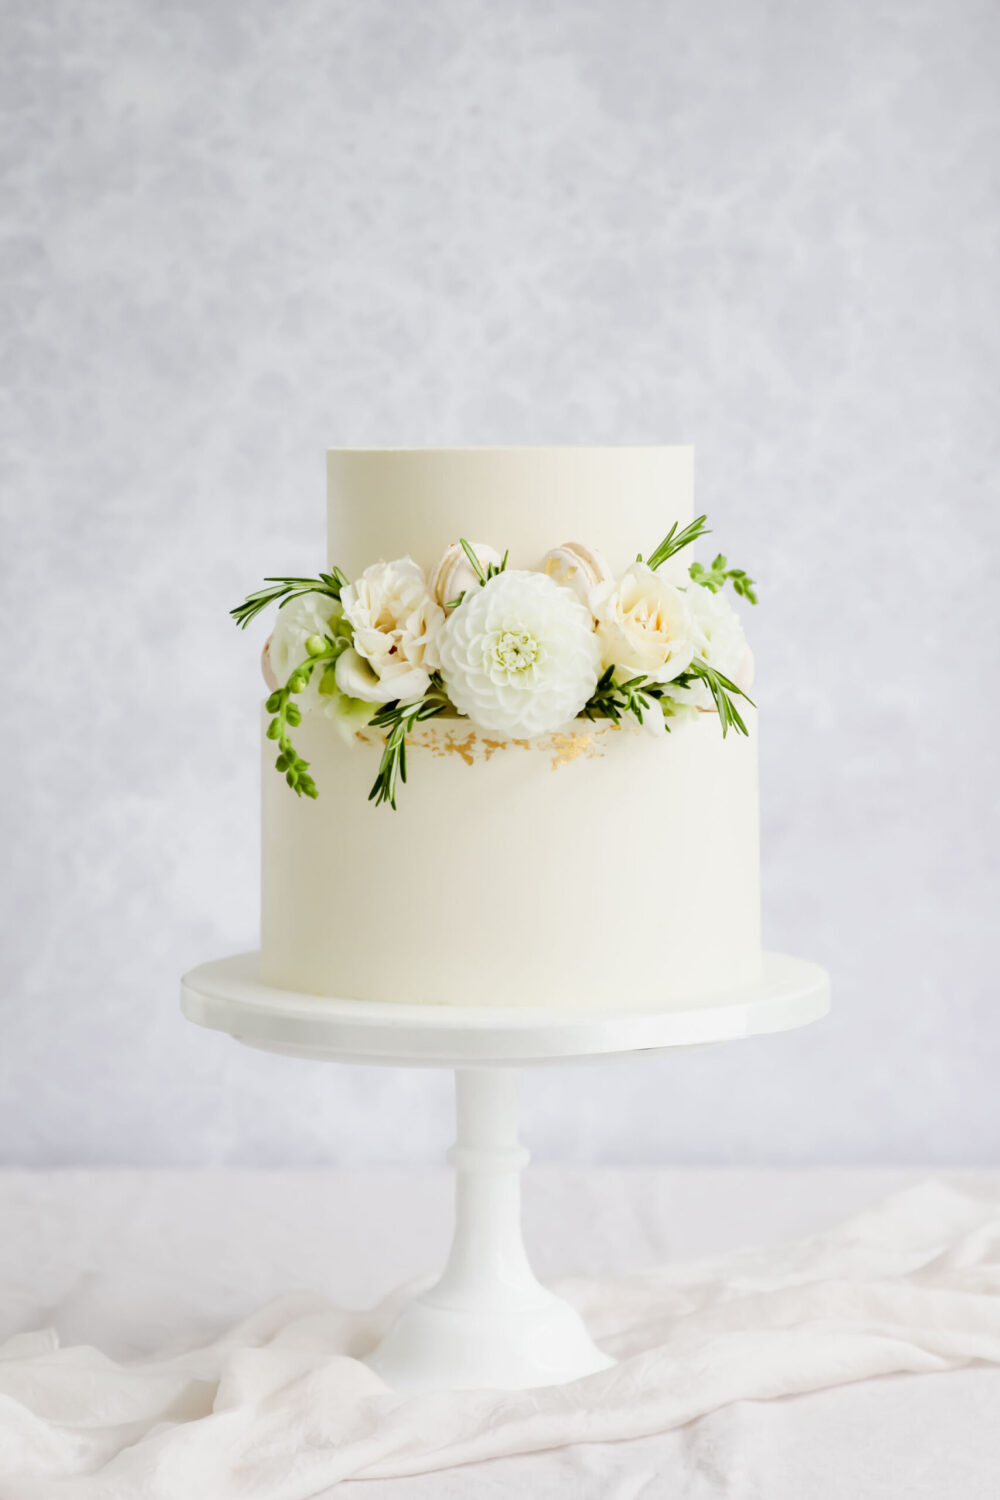 Blog Should I Choose Fresh Or Sugar Flowers For My Wedding Cake Cove Cake Design Luxury